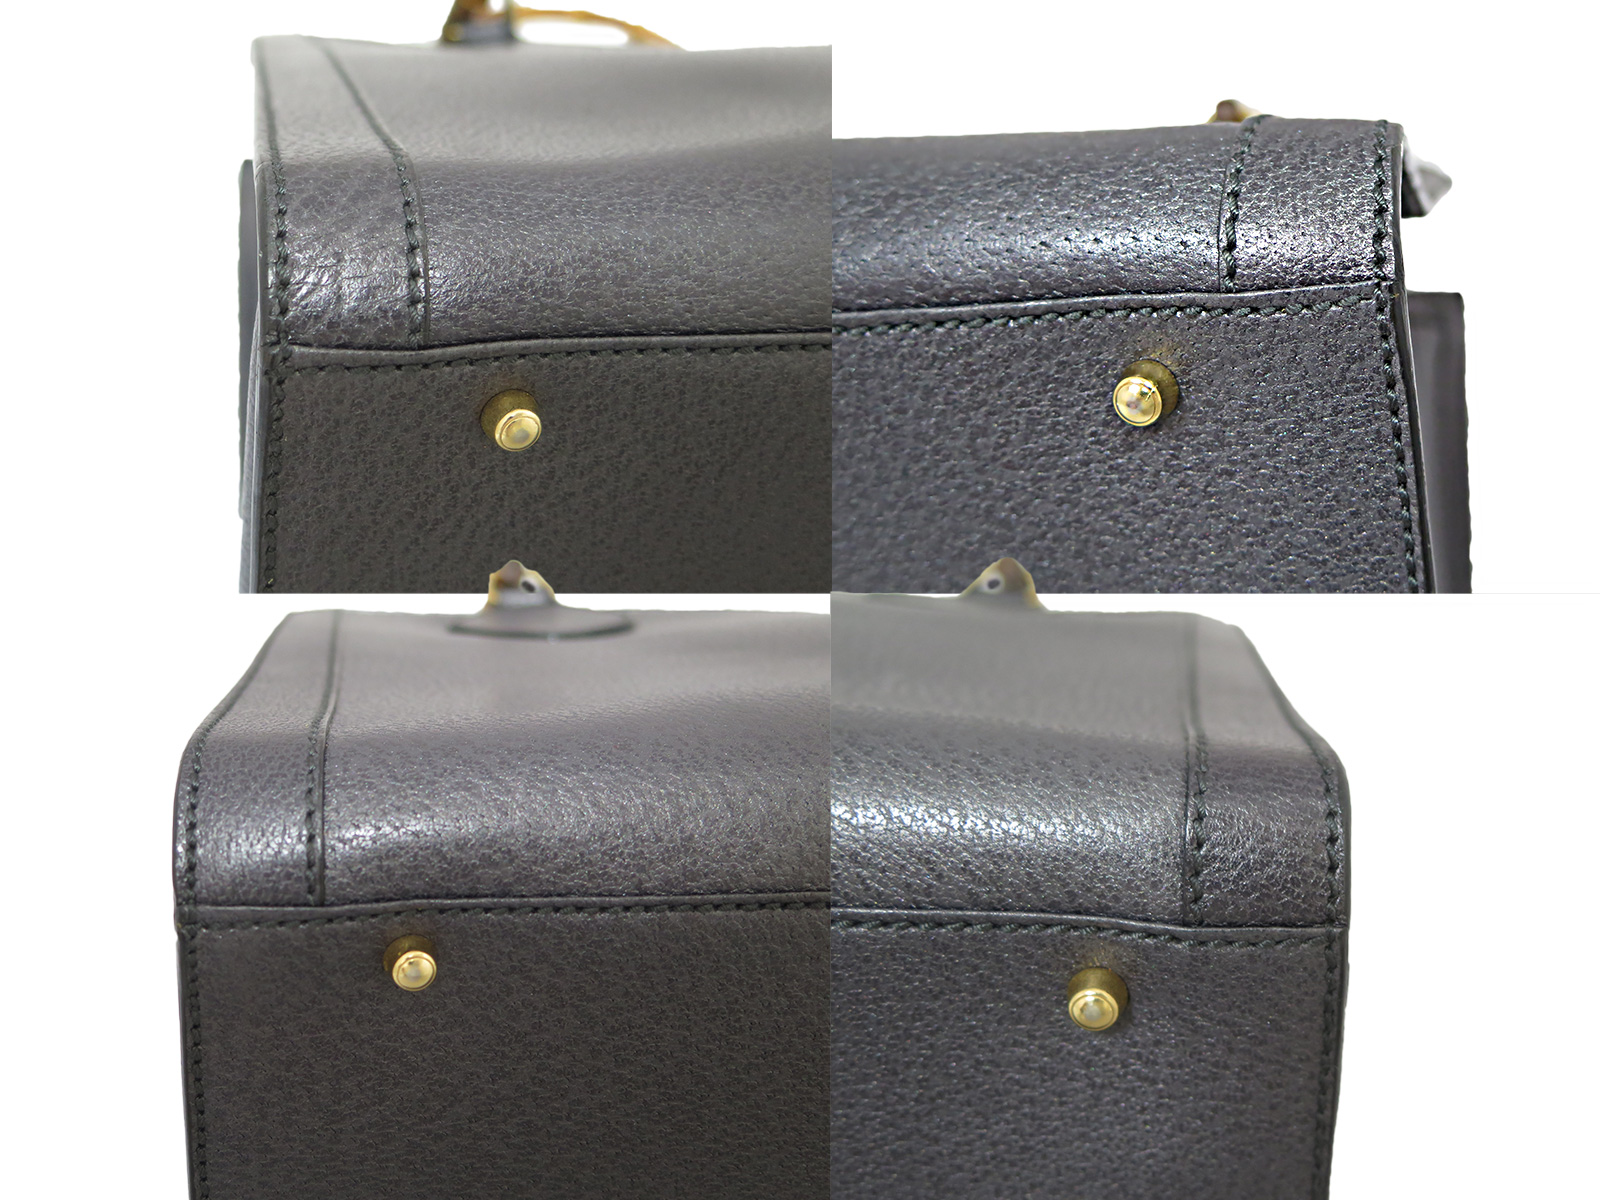 Auth GUCCI Bamboo Handbag Dark Gray Leather Goldtone Hardware - e12705 | eBay